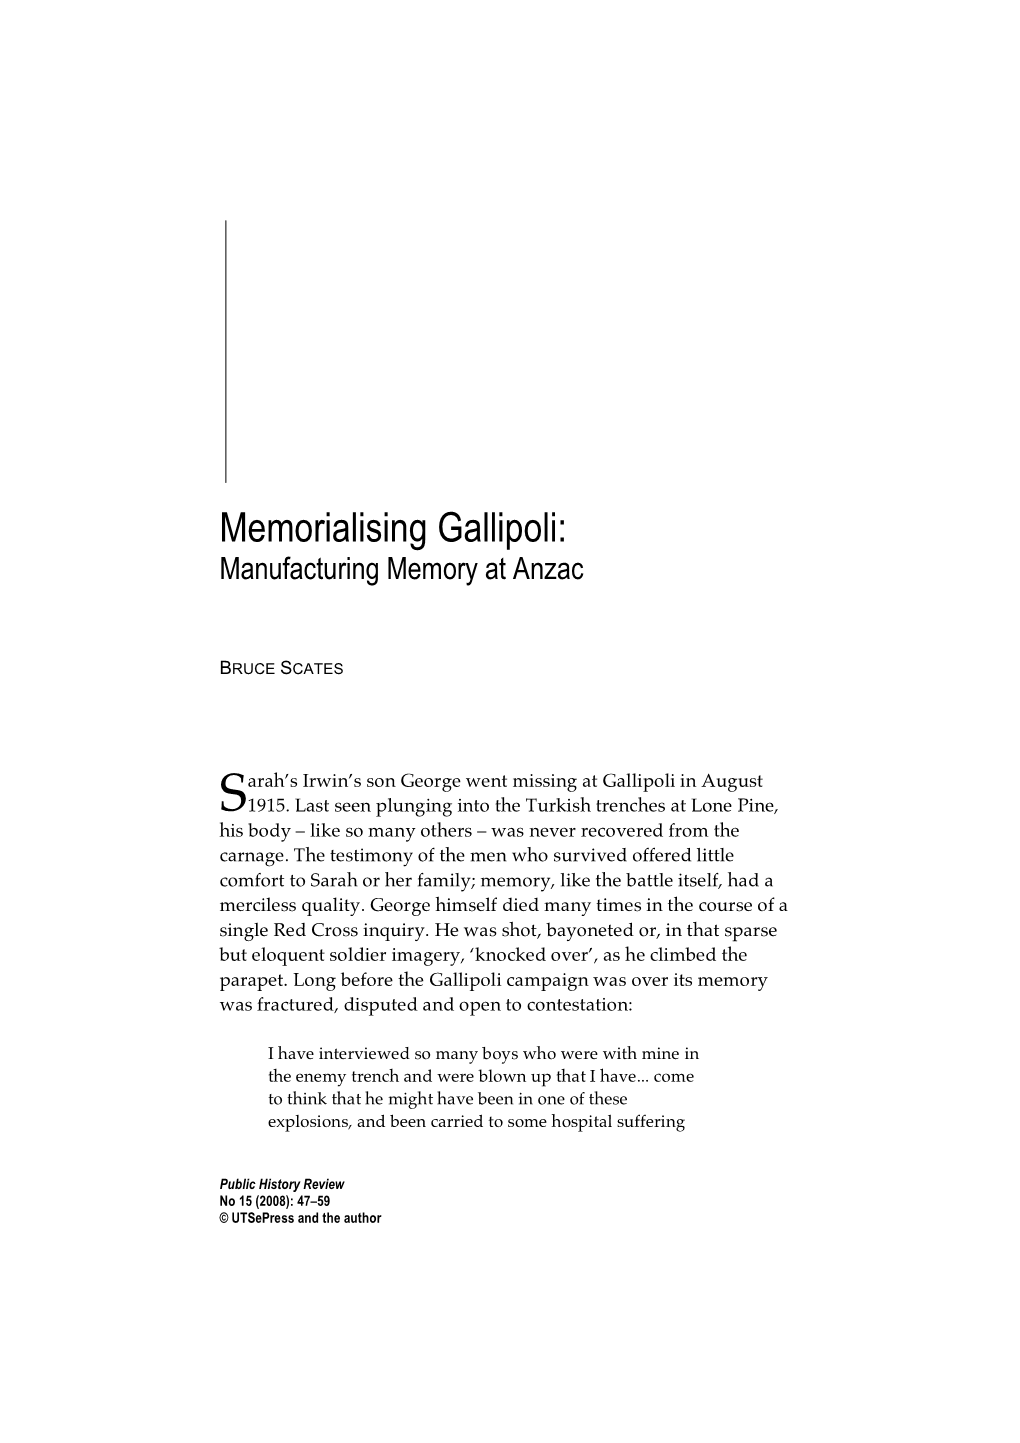 Memorialising Gallipoli: Manufacturing Memory at Anzac